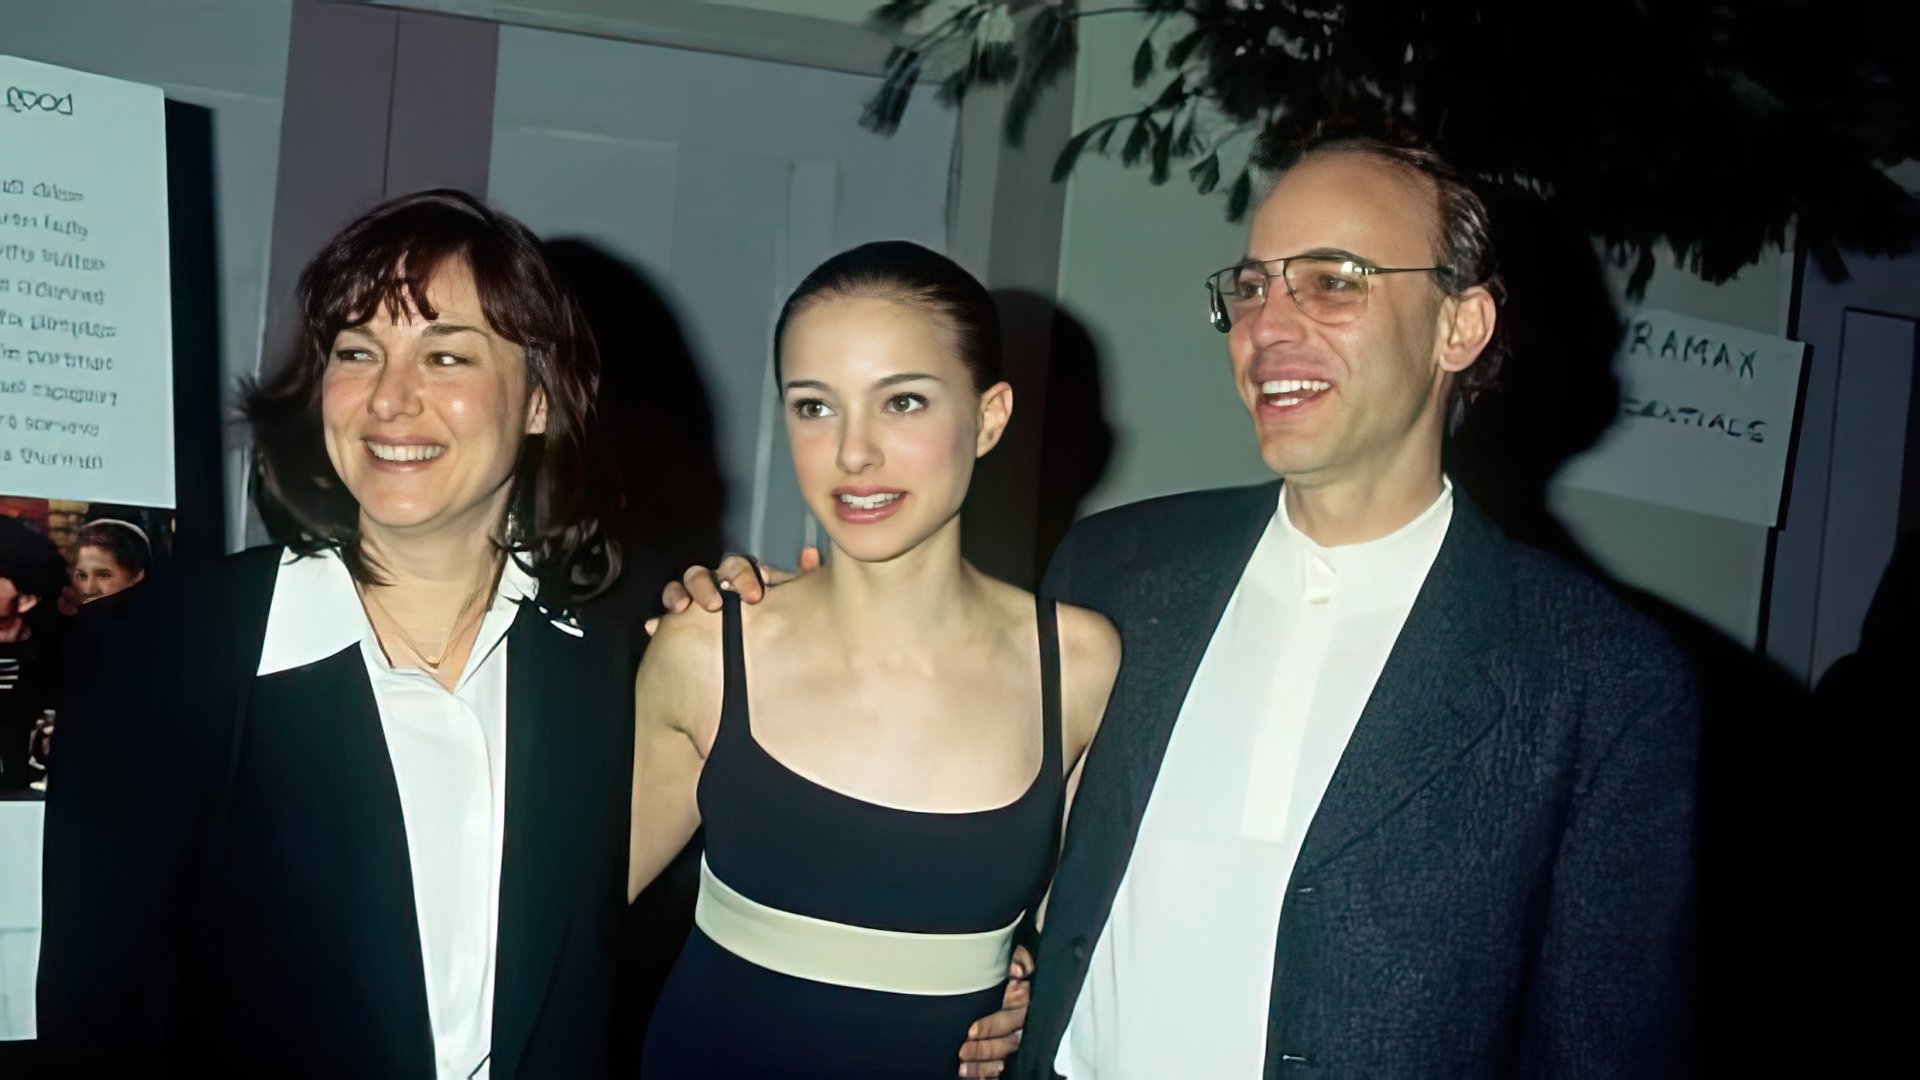 Parents of Natalie Portman are Jews